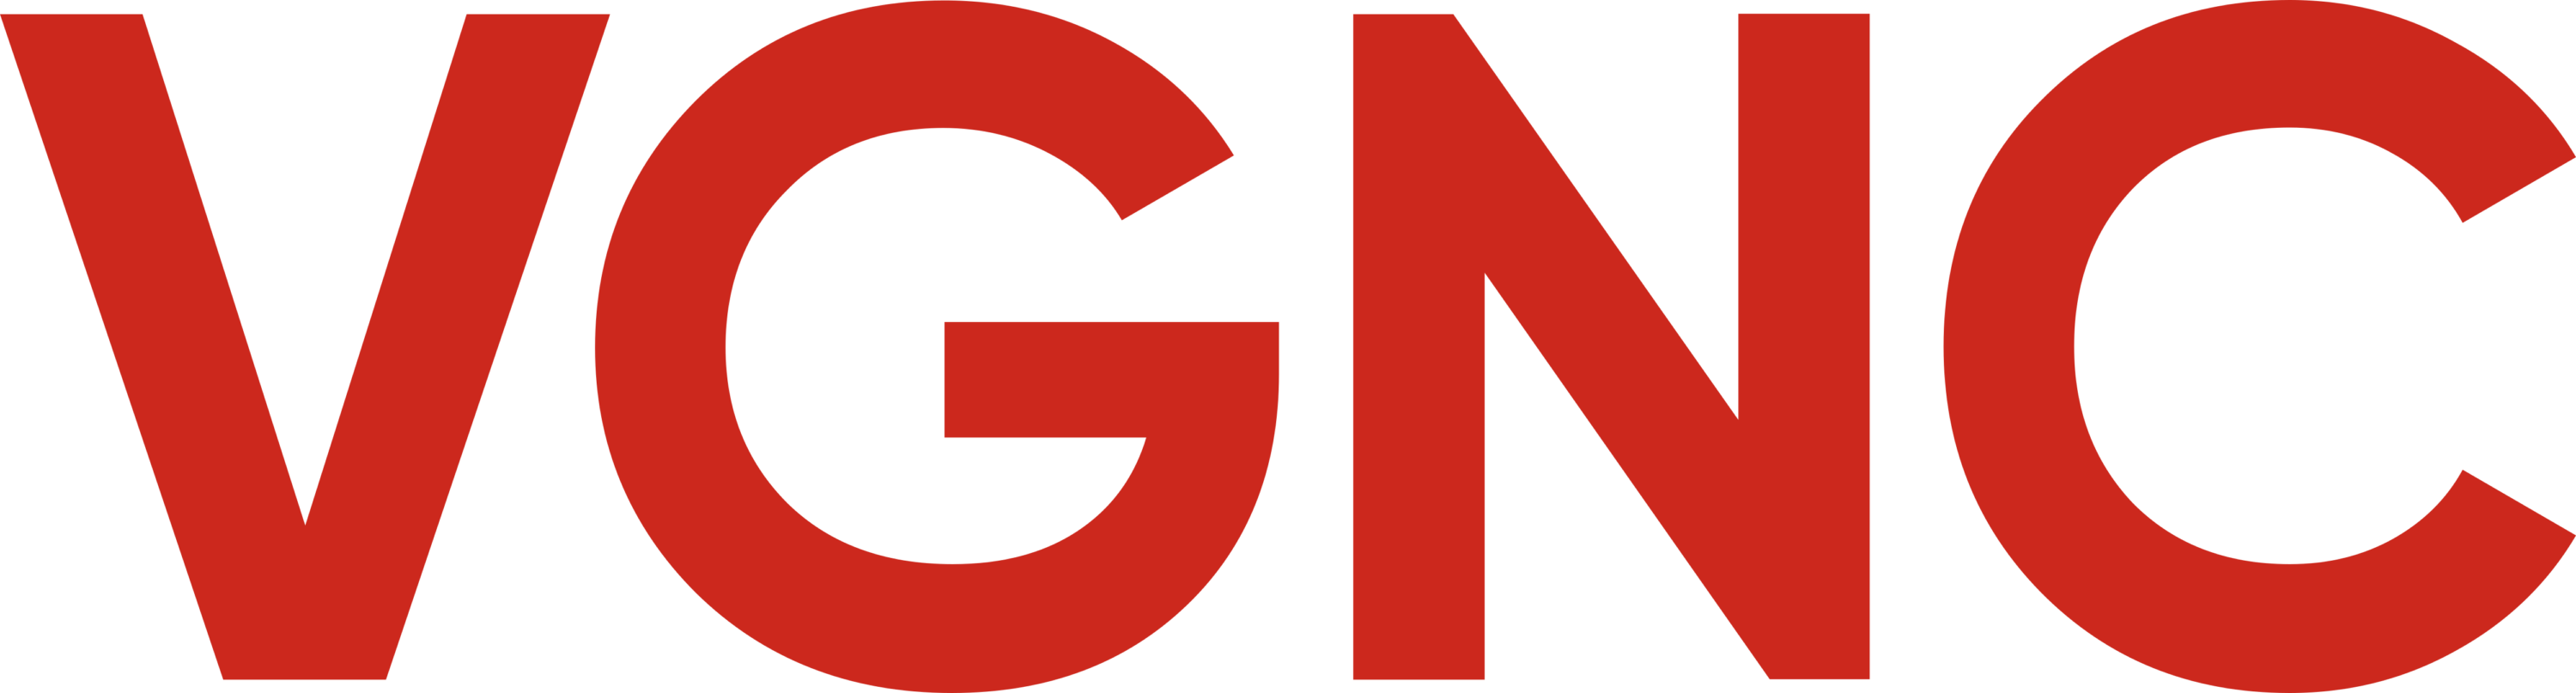 VGNC Logo